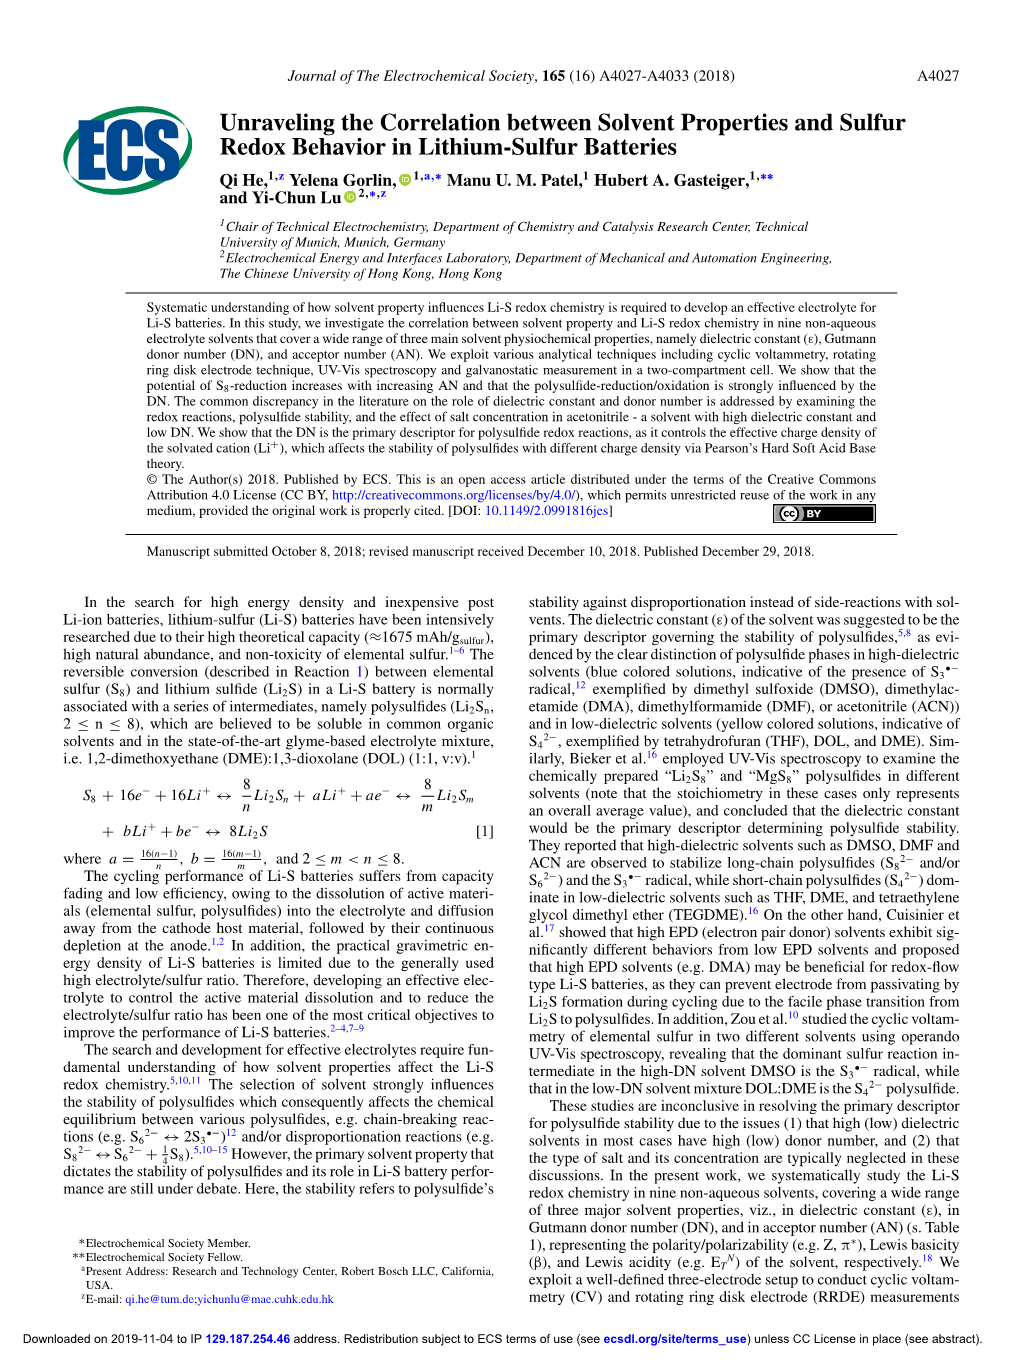 Unraveling the Correlation Between Solvent Properties and Sulfur Redox Behavior in Lithium-Sulfur Batteries Qi He,1,Z Yelena Gorlin, 1,A,∗ Manu U